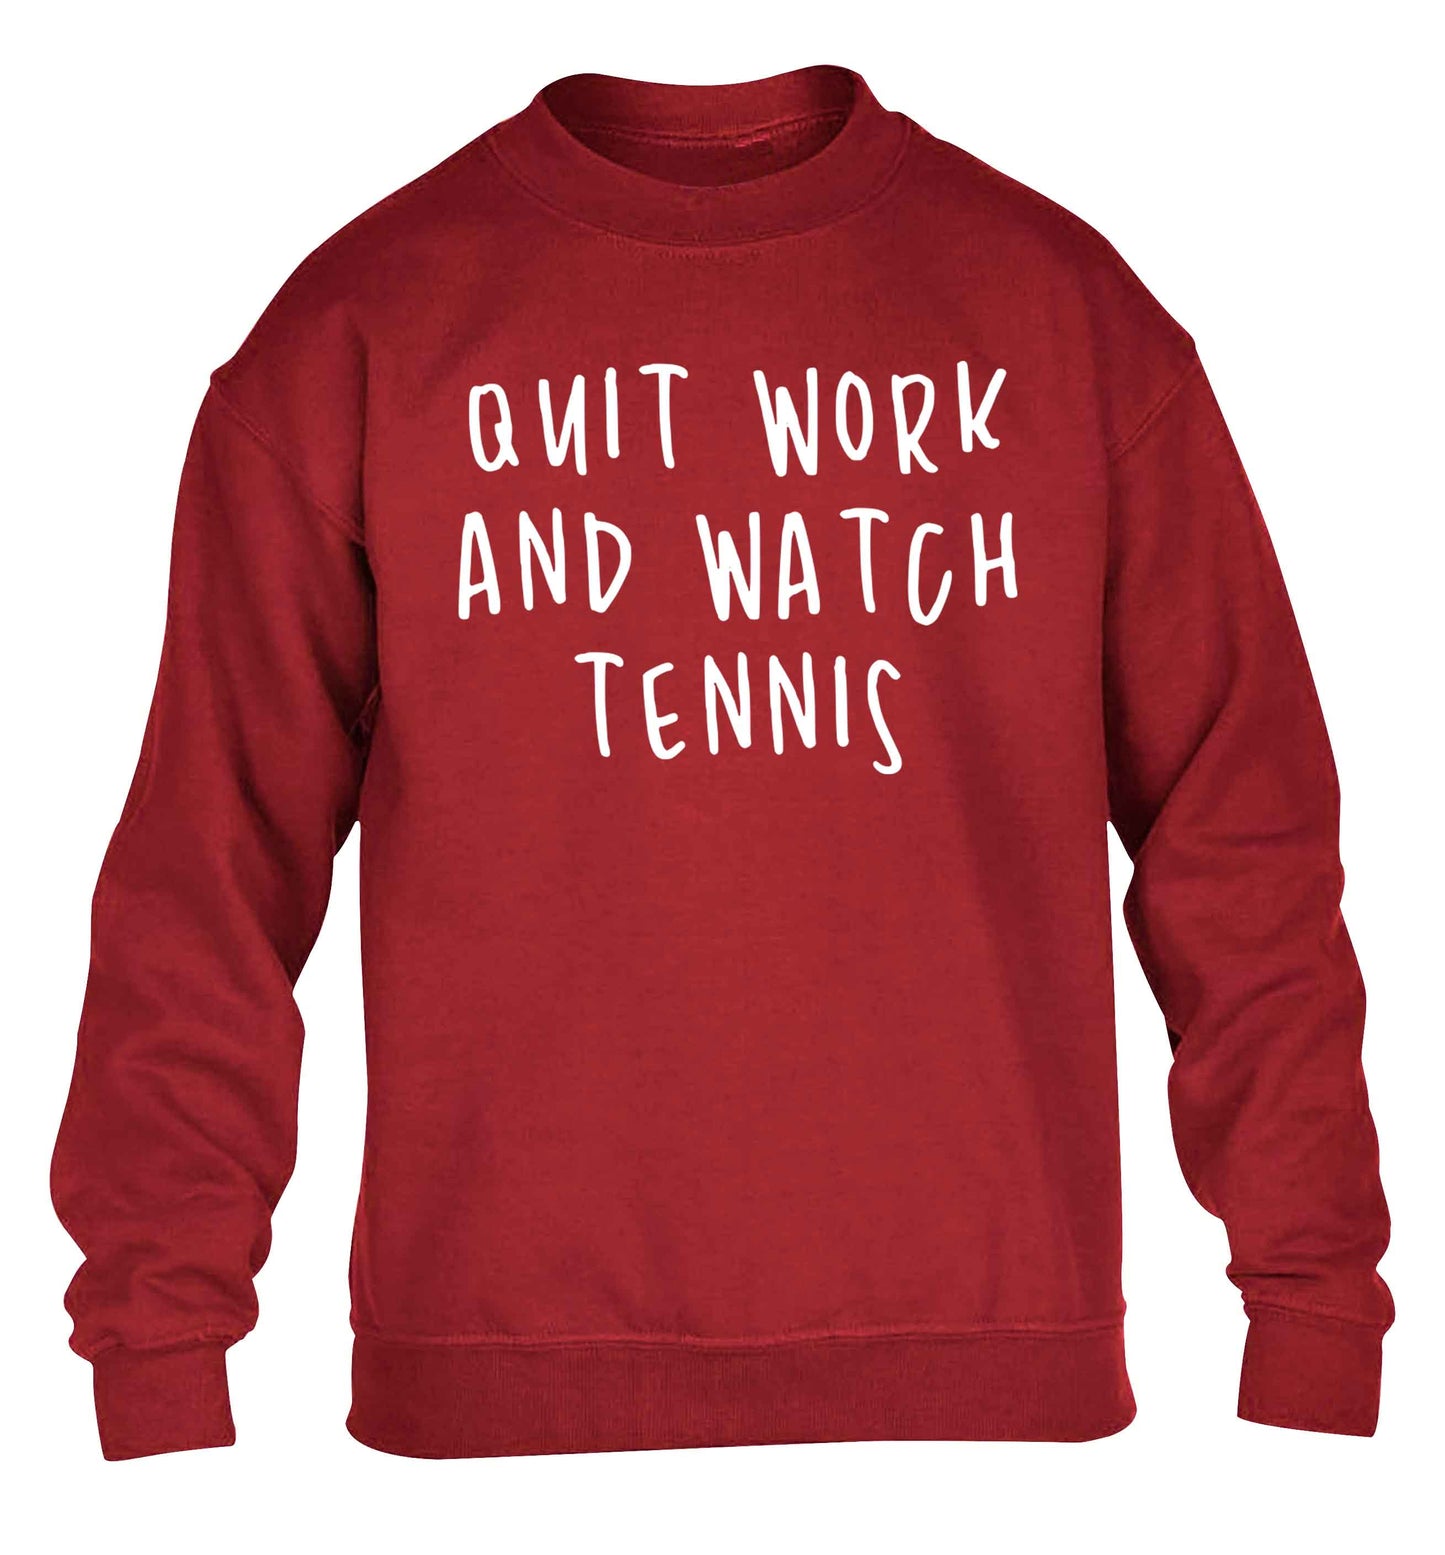 Quit work and watch tennis children's grey sweater 12-13 Years